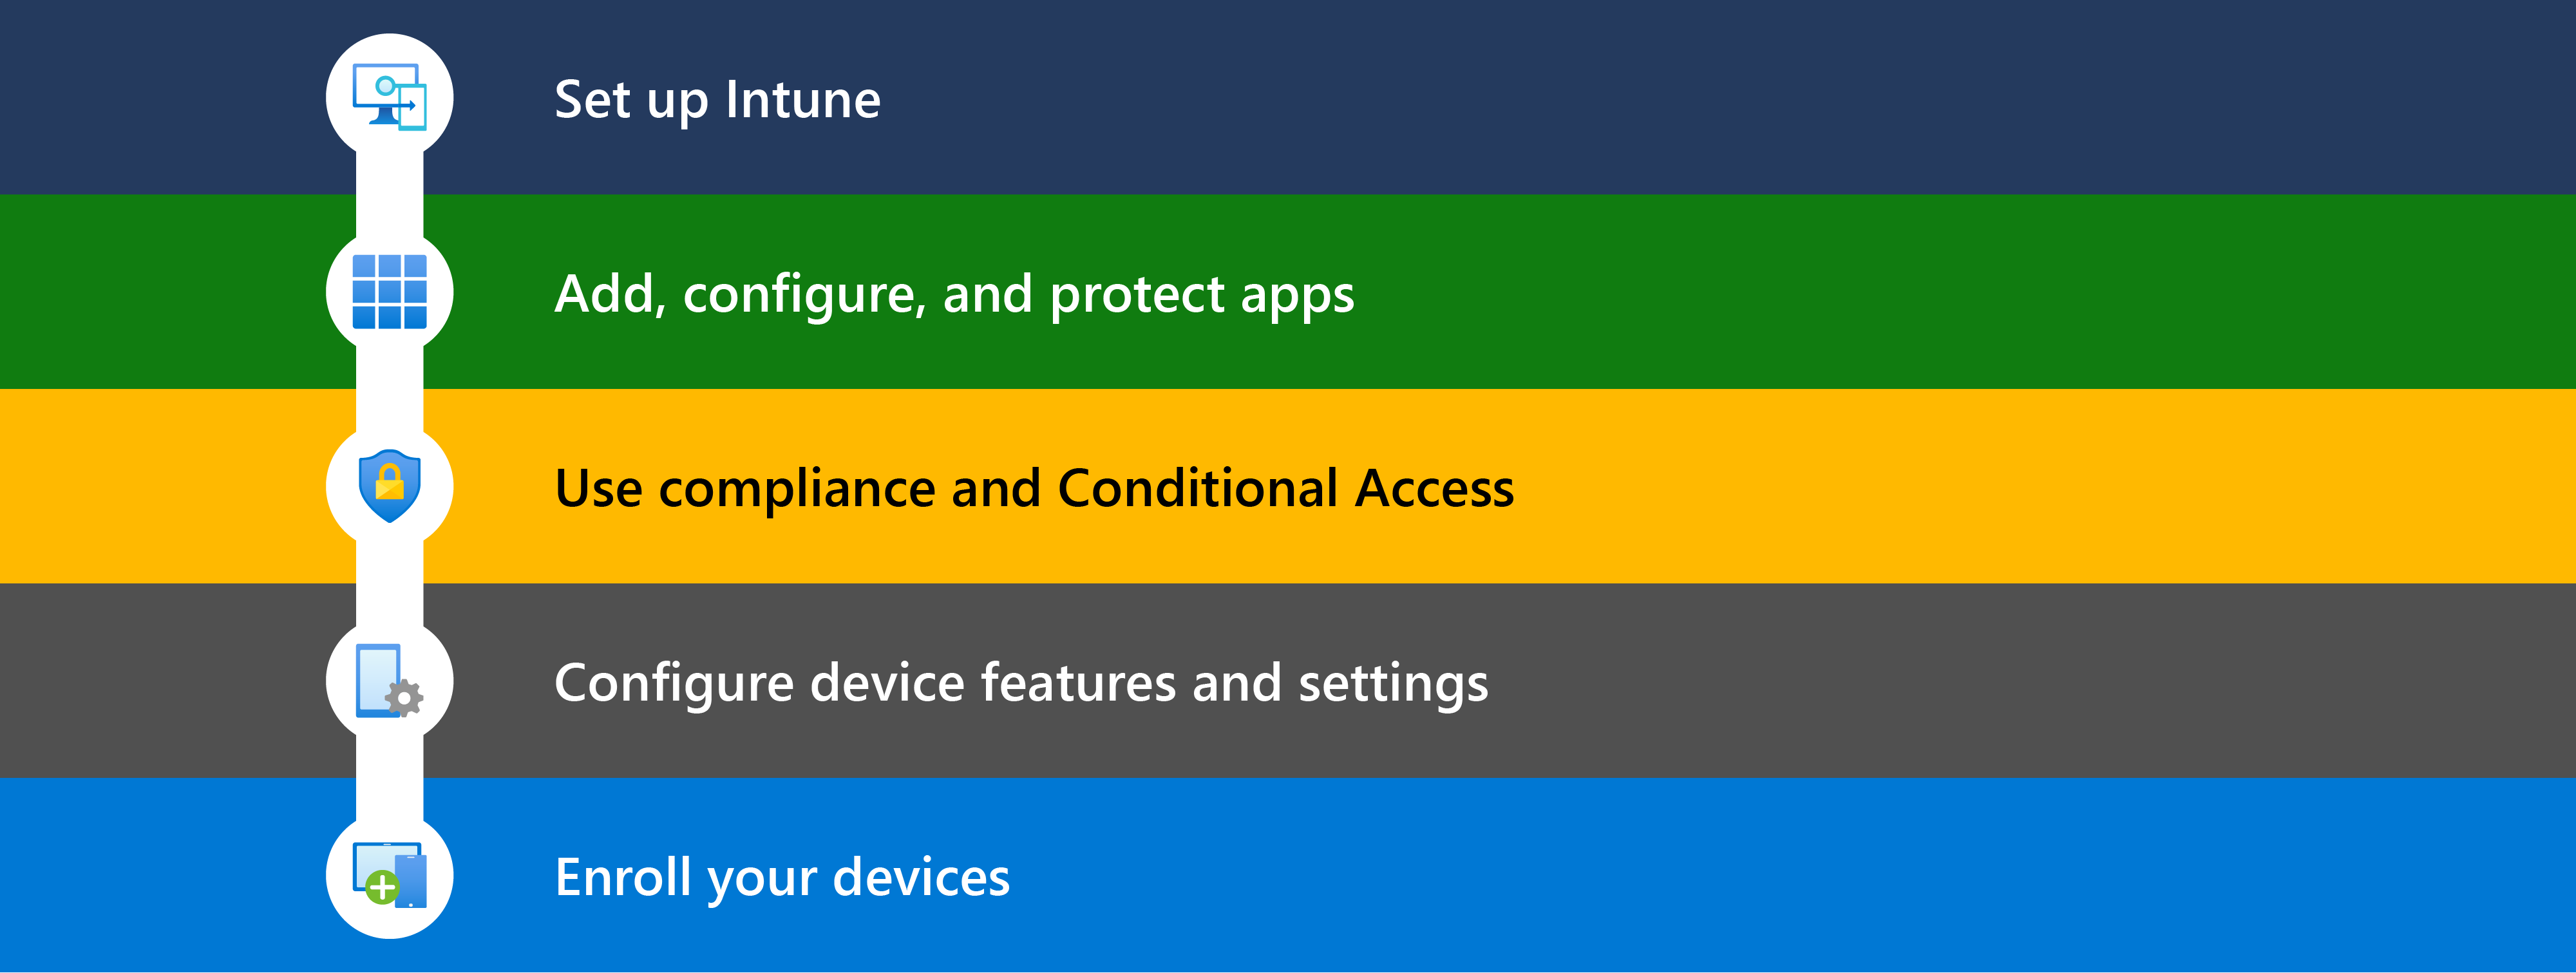 Microsoft Intune のセットアップ、アプリの追加、条件付きアクセス & コンプライアンスの使用、デバイス機能の構成、管理するデバイスの登録など、Microsoft Intune の使用を開始するためのさまざまな手順を示す図。